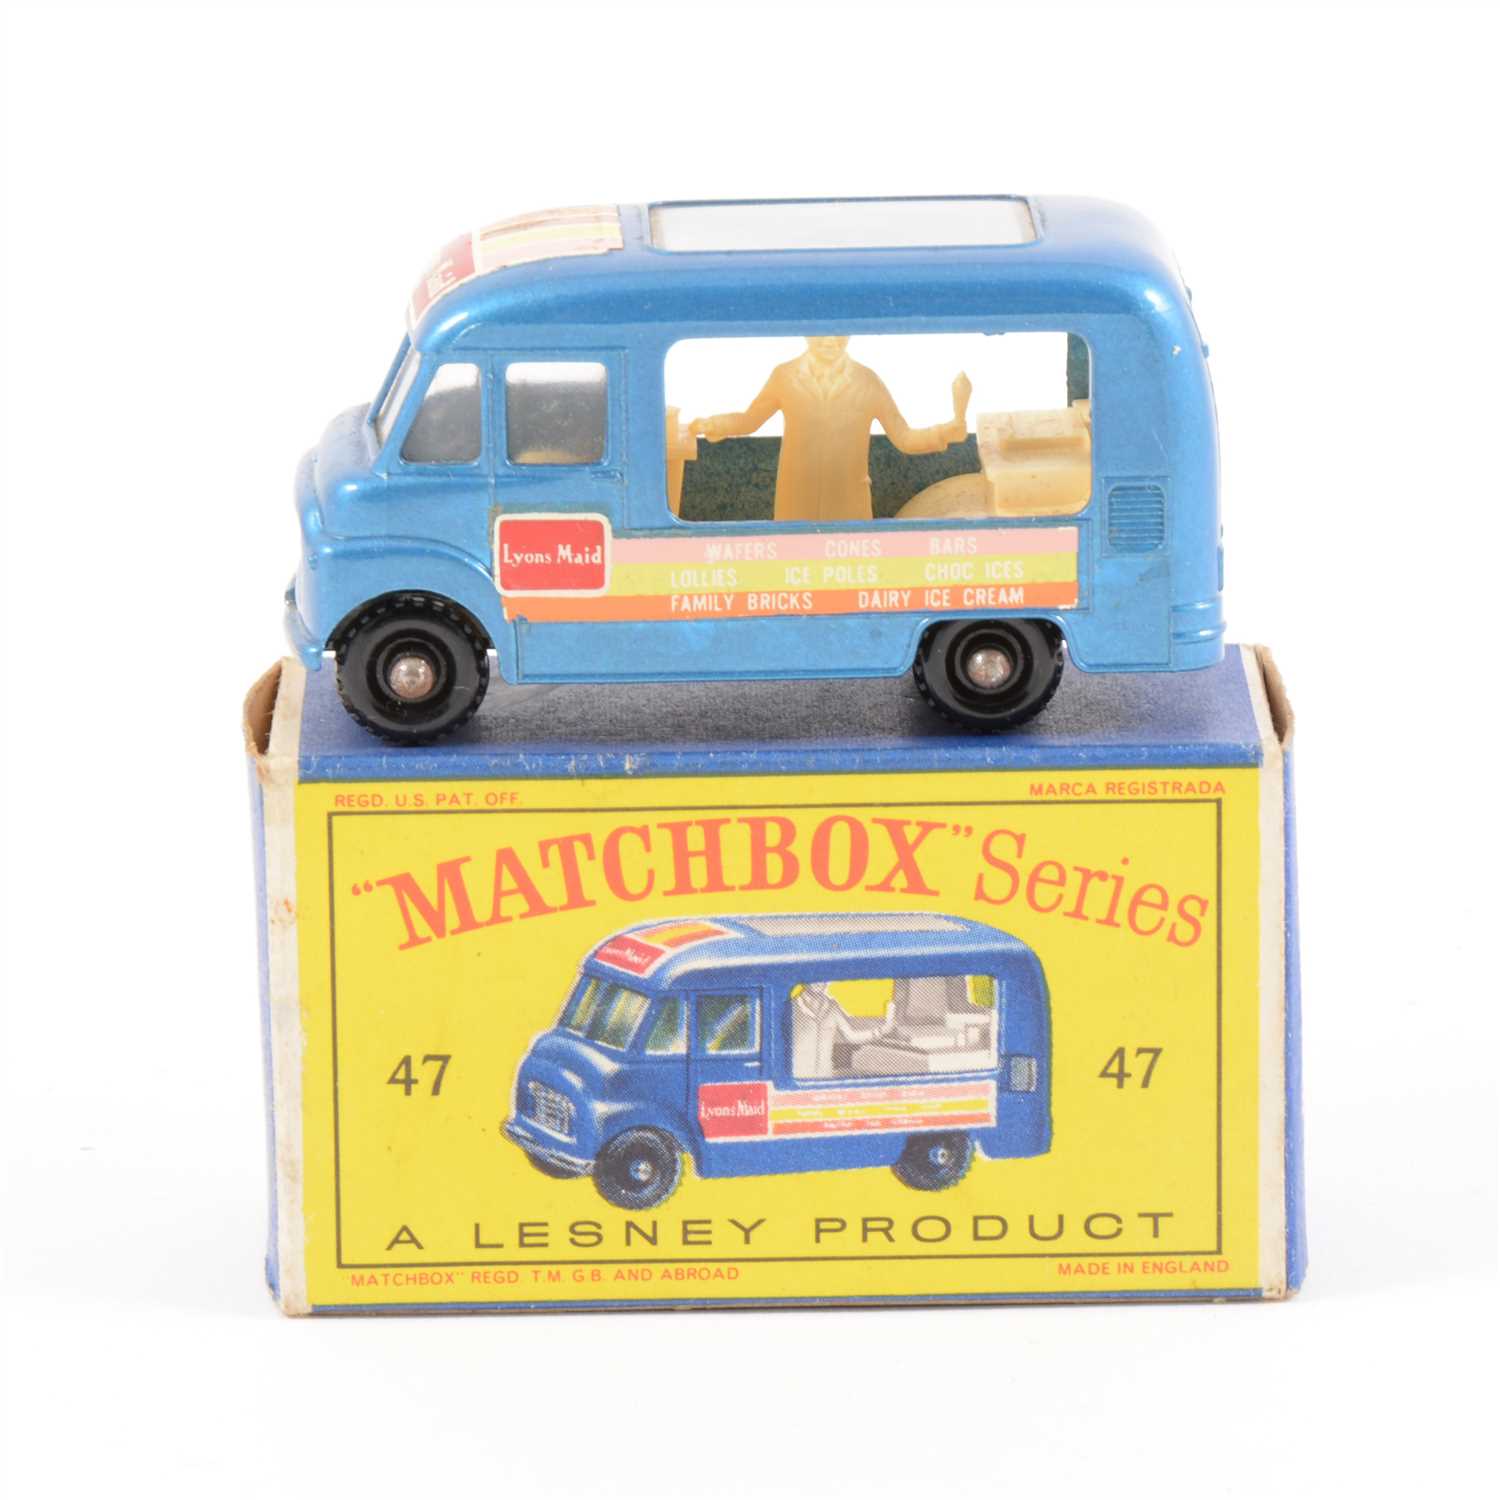 Lot 266 - Matchbox Toys; no.47 Lyons Maid Ice-Cream mobile shop, metallic blue body cream interior, boxed.